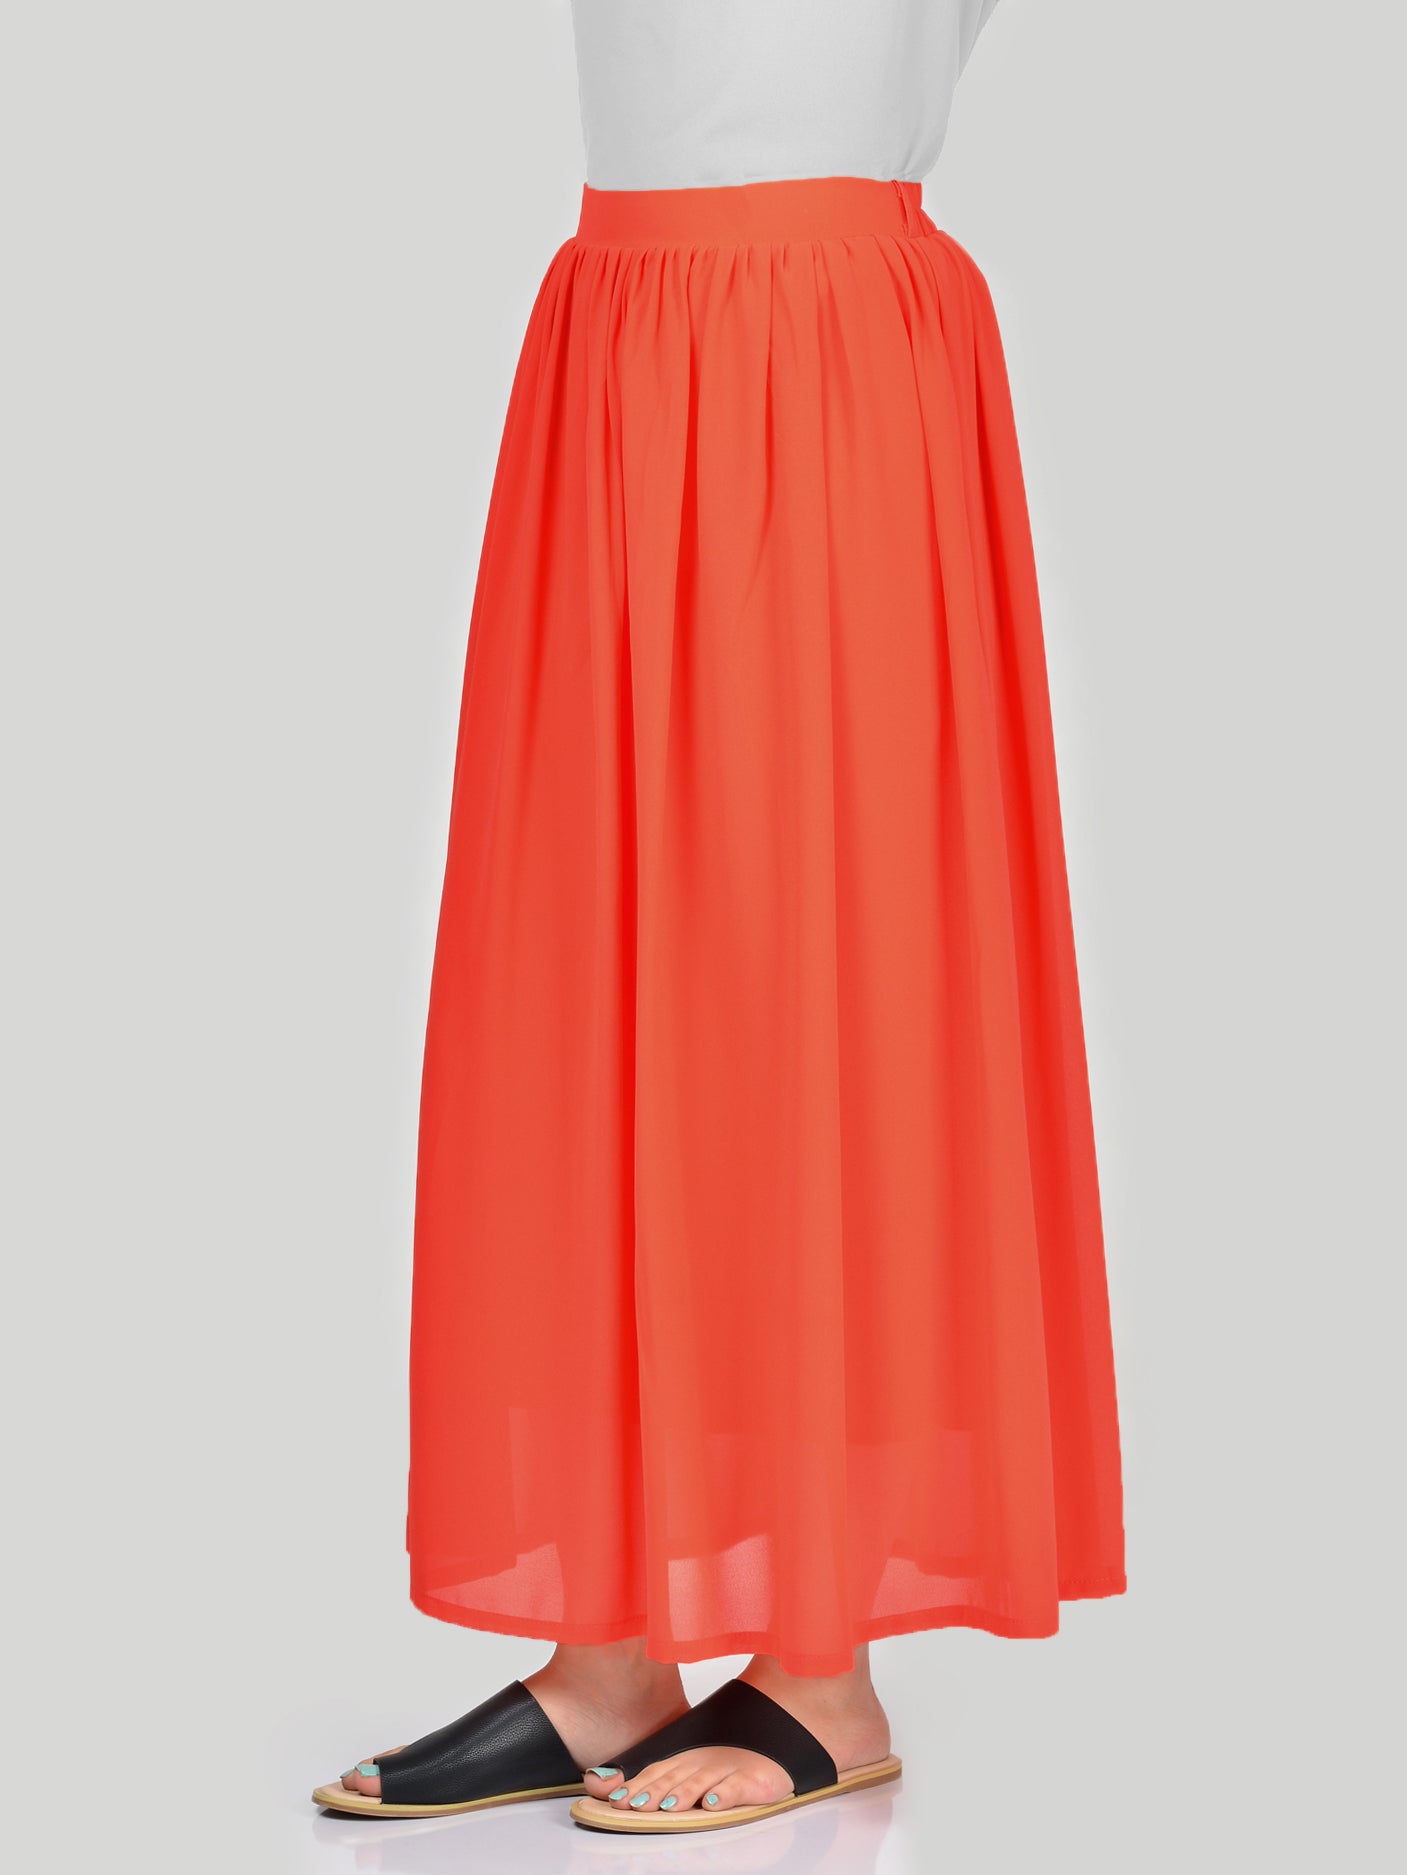 Chiffon Skirt-Orange